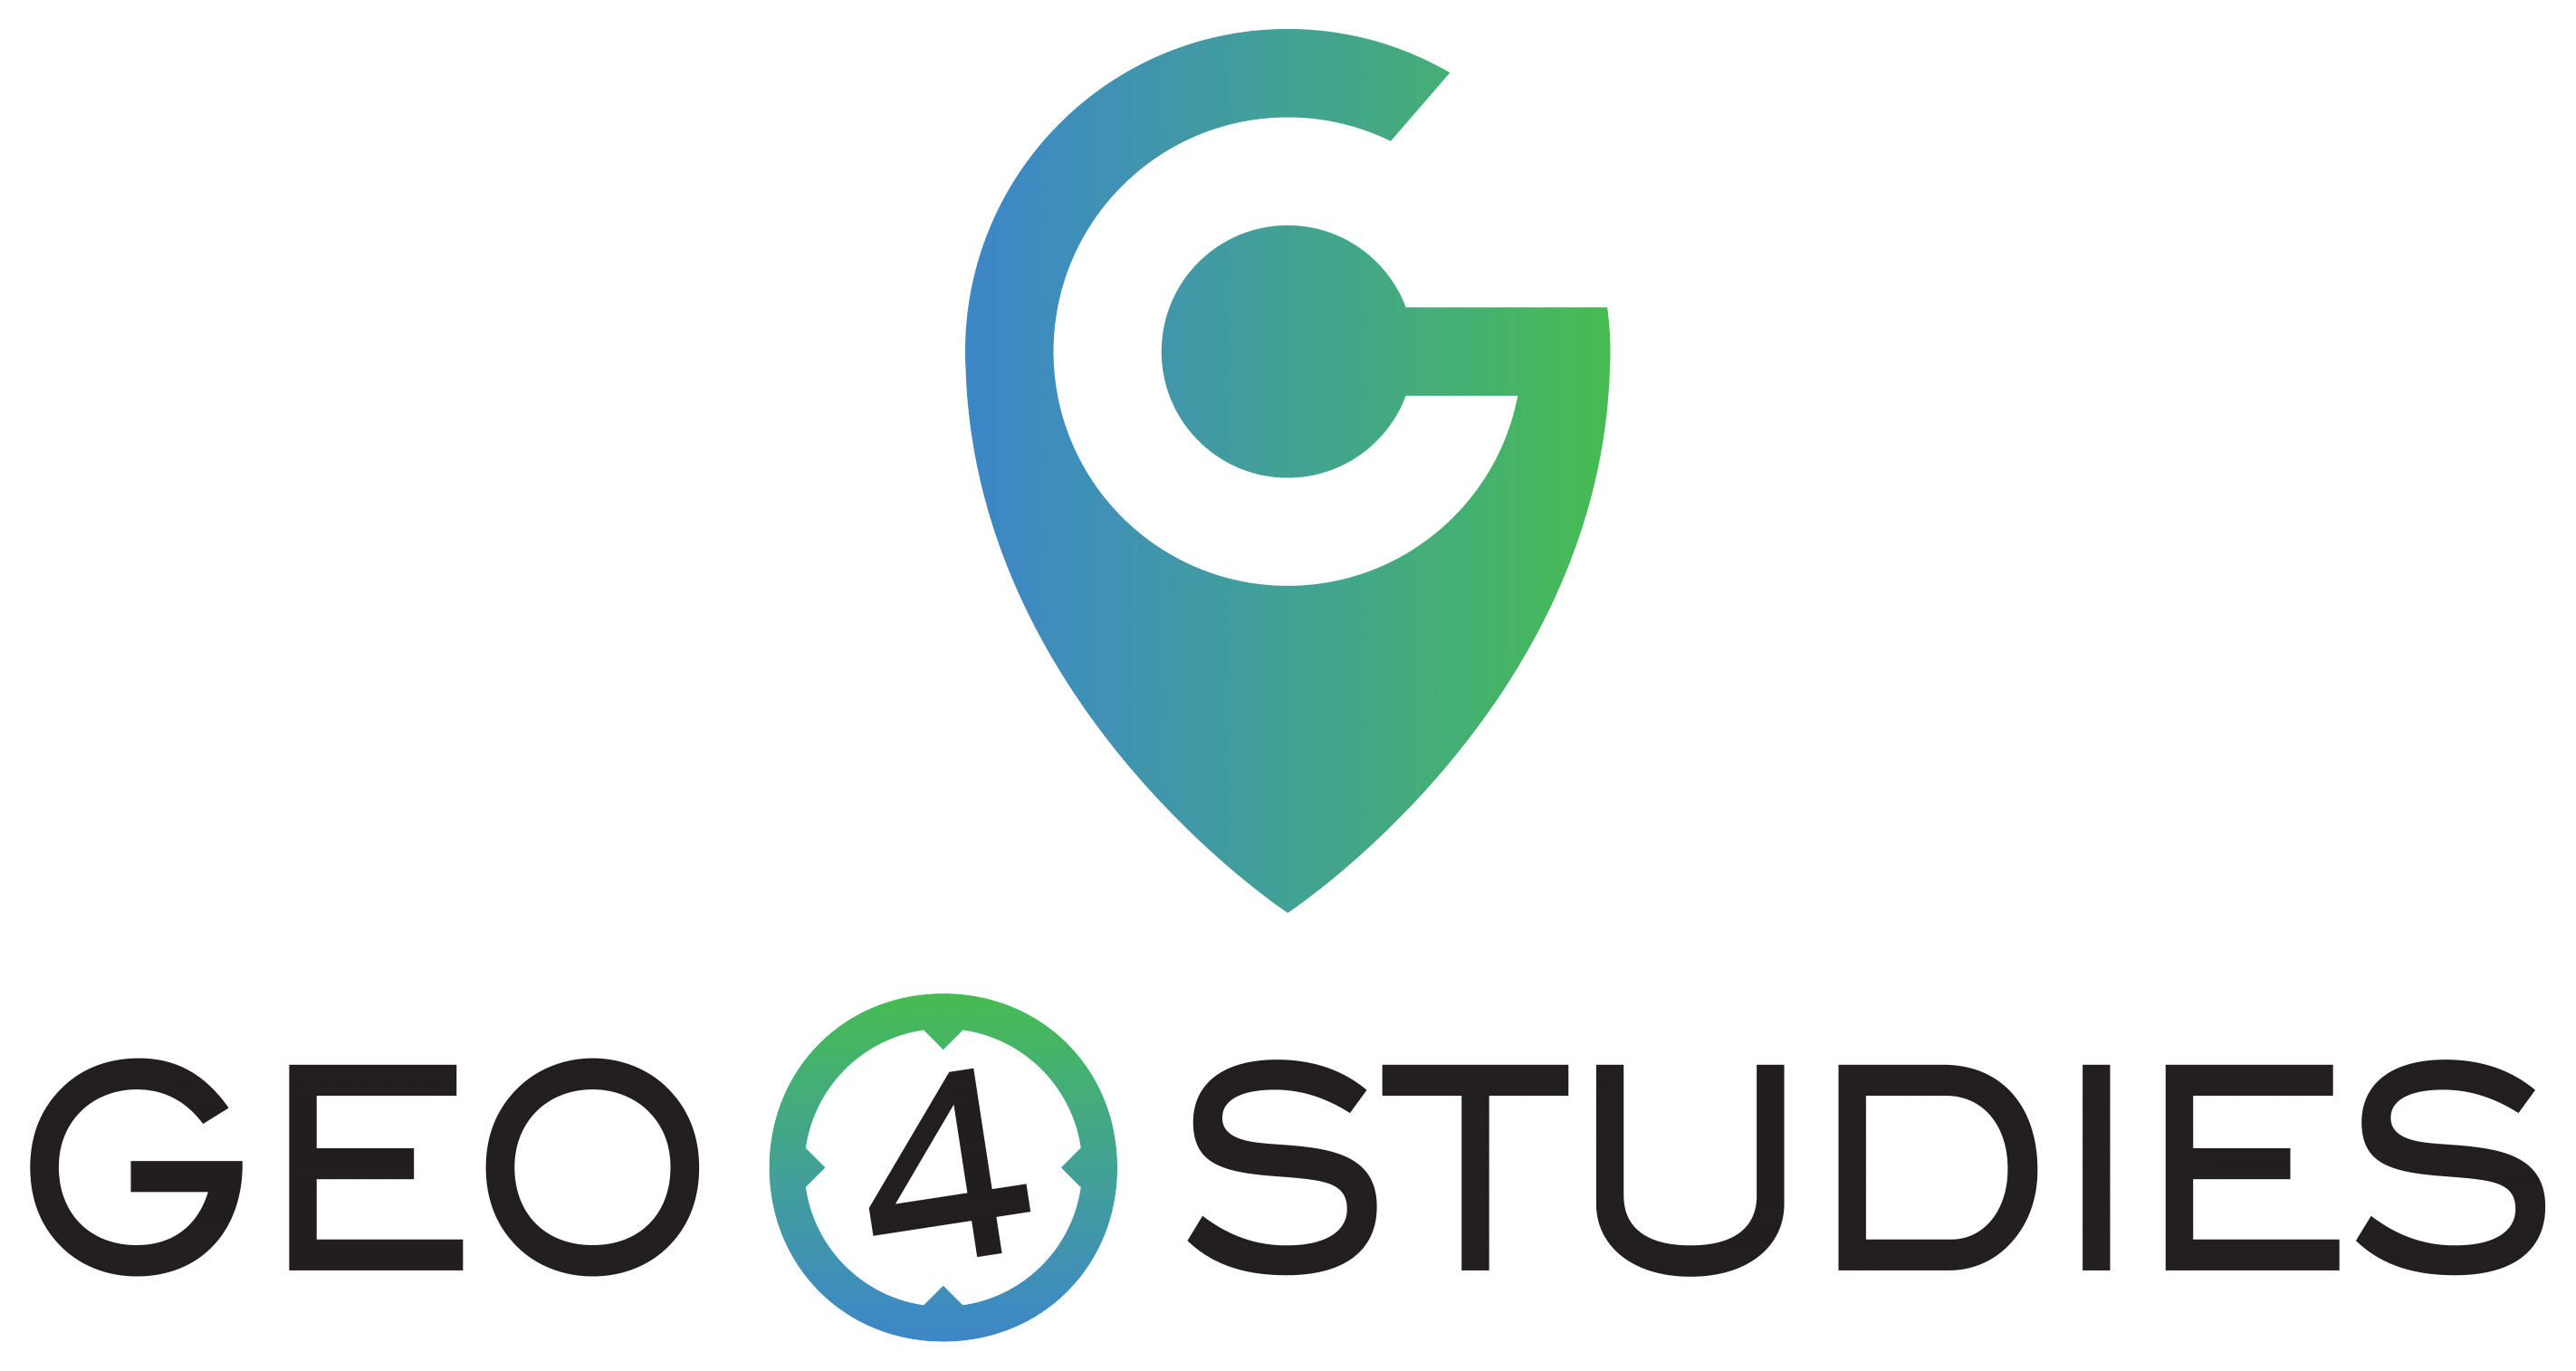 Geo4studies